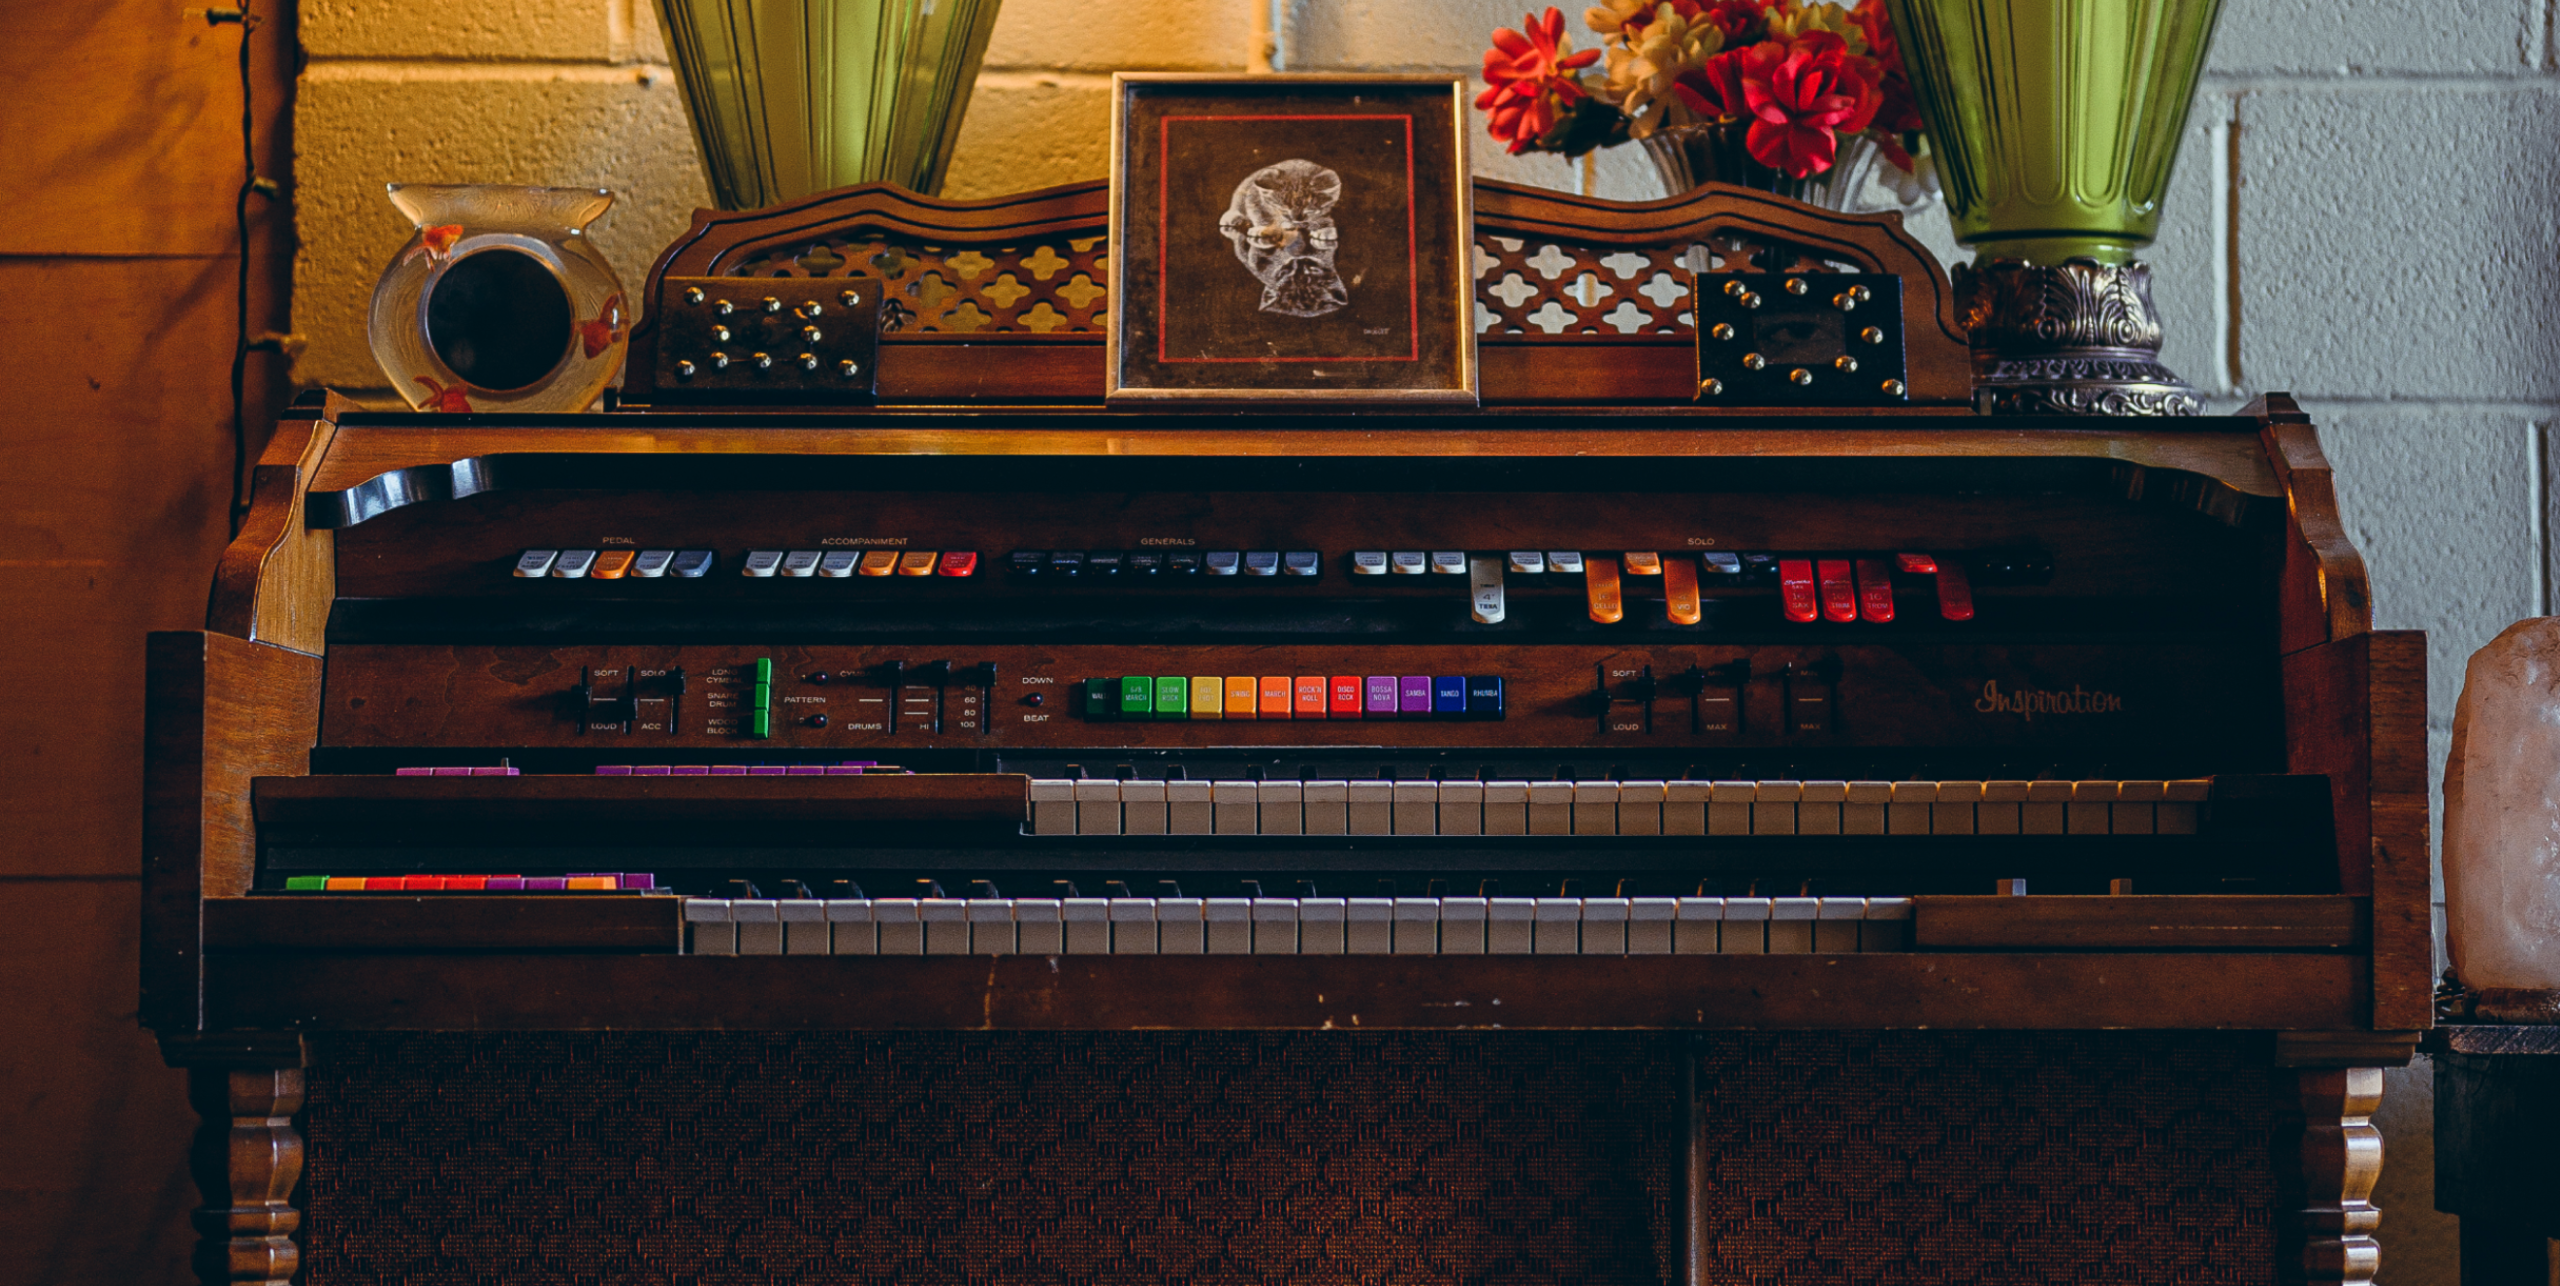 Kimball Electric Organ with colorful keys